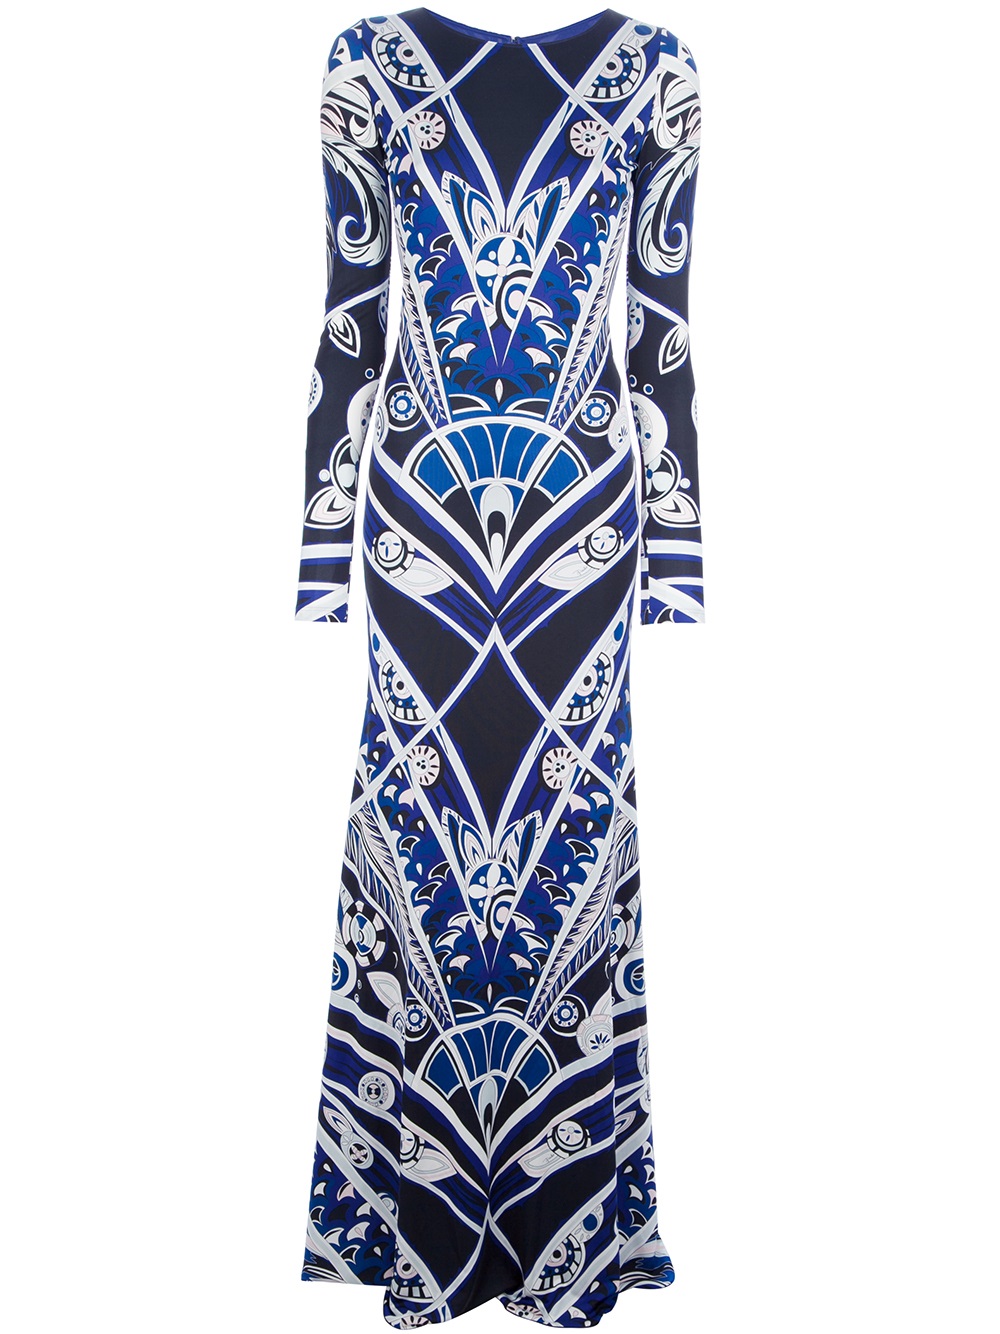 Lyst - Emilio Pucci Backless Maxi Dress in Blue